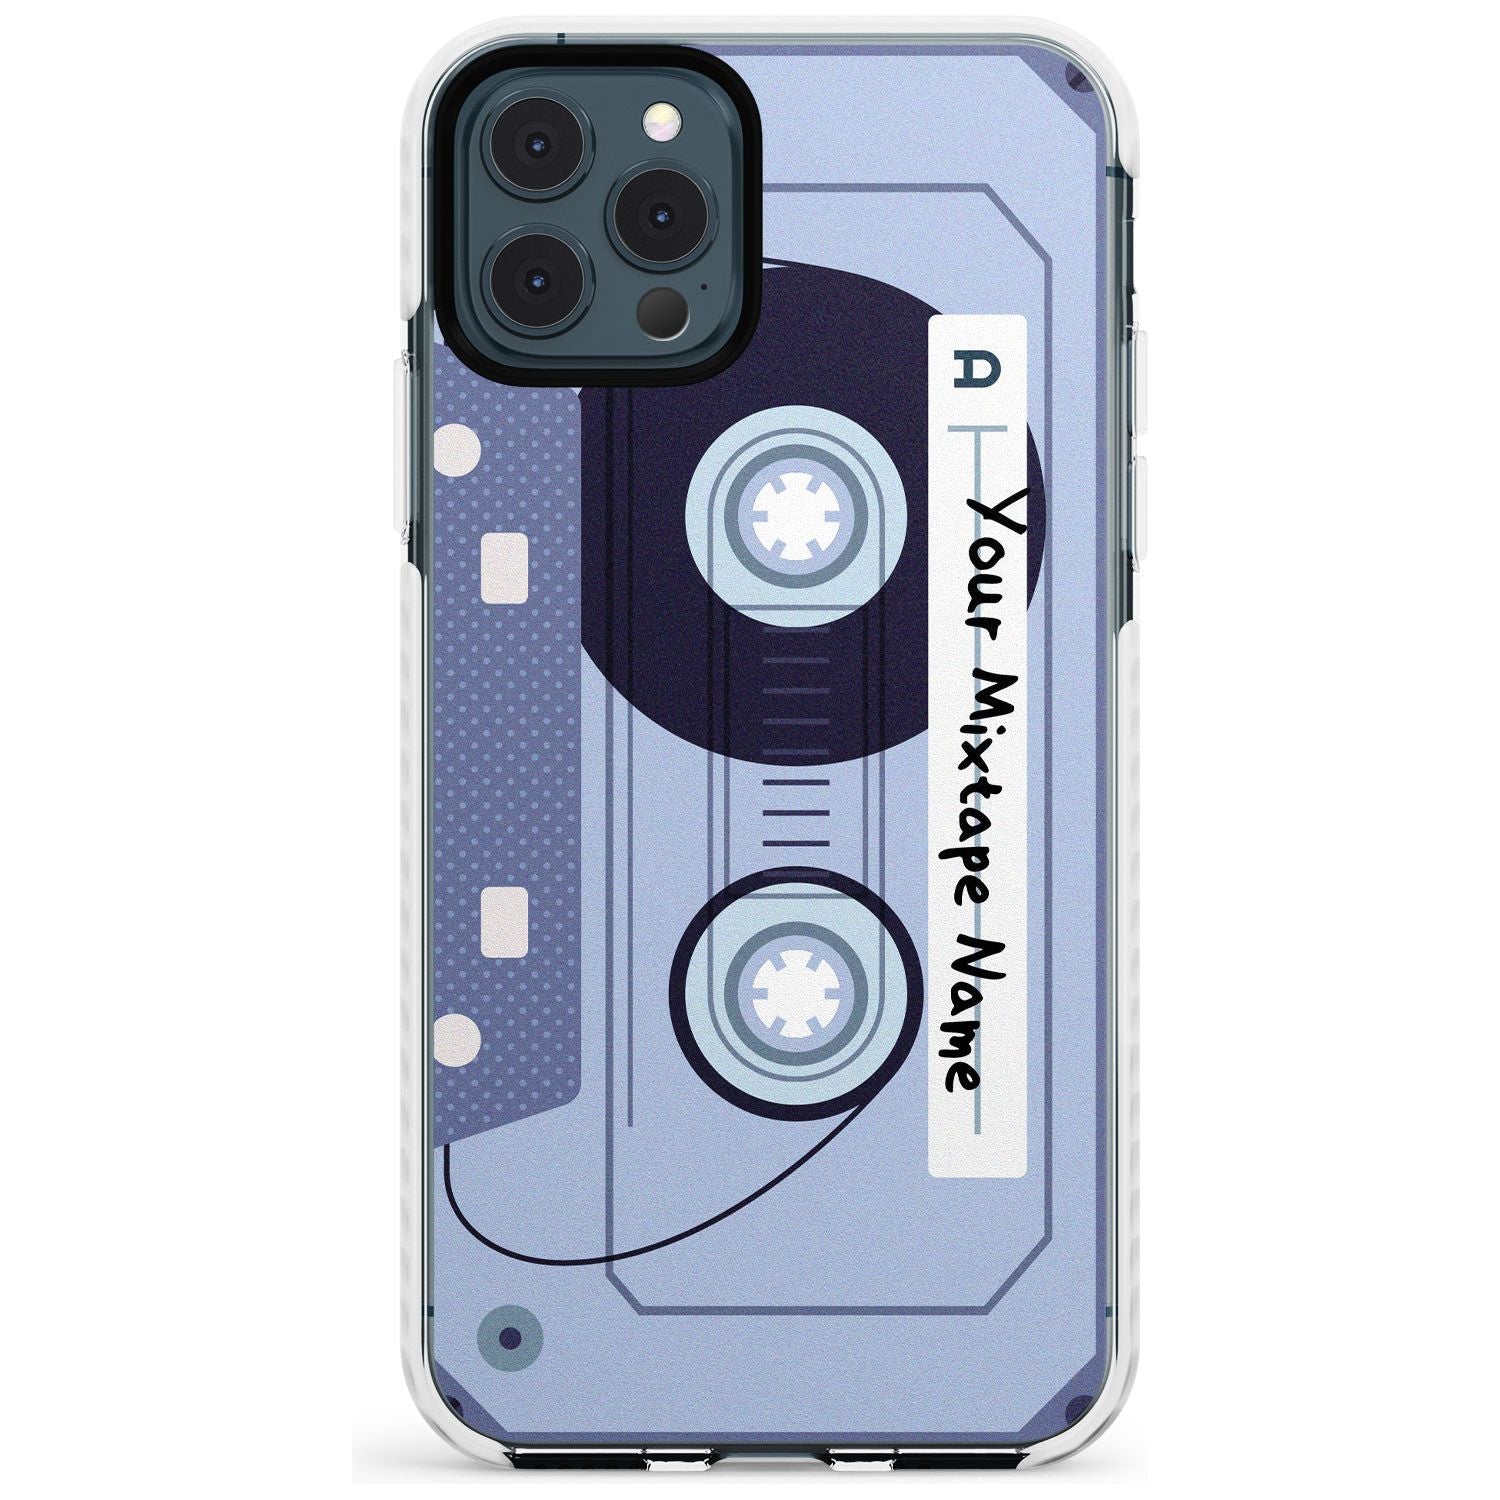 Industrial Mixtape Slim TPU Phone Case for iPhone 11 Pro Max